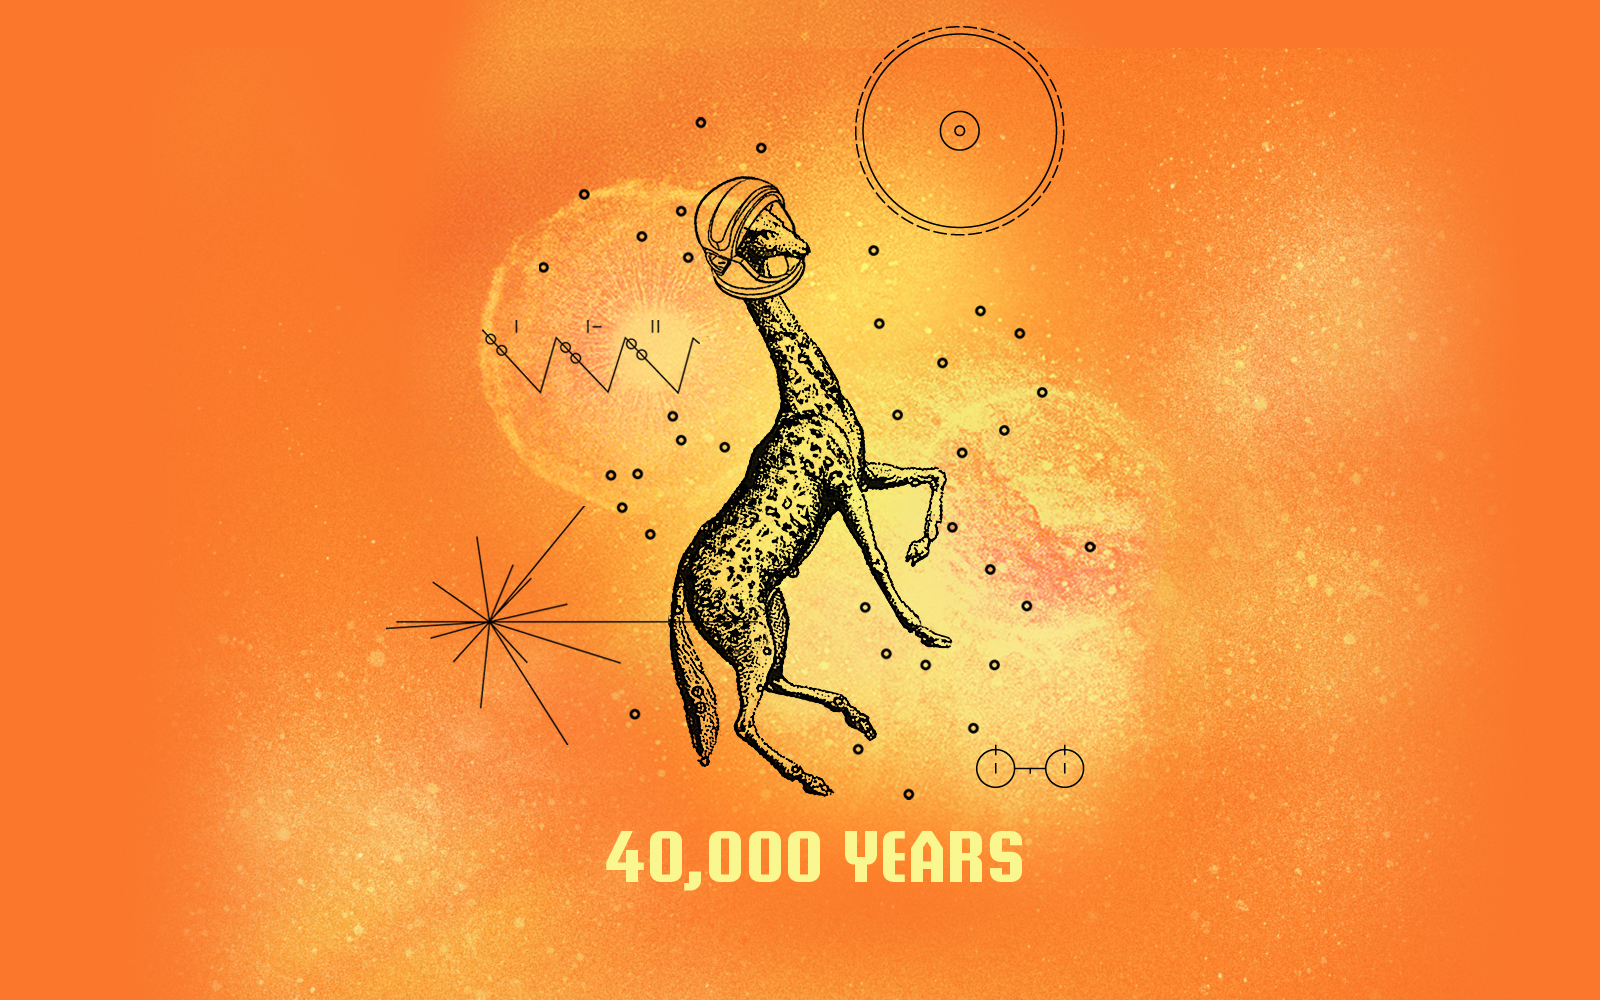 40,000 years